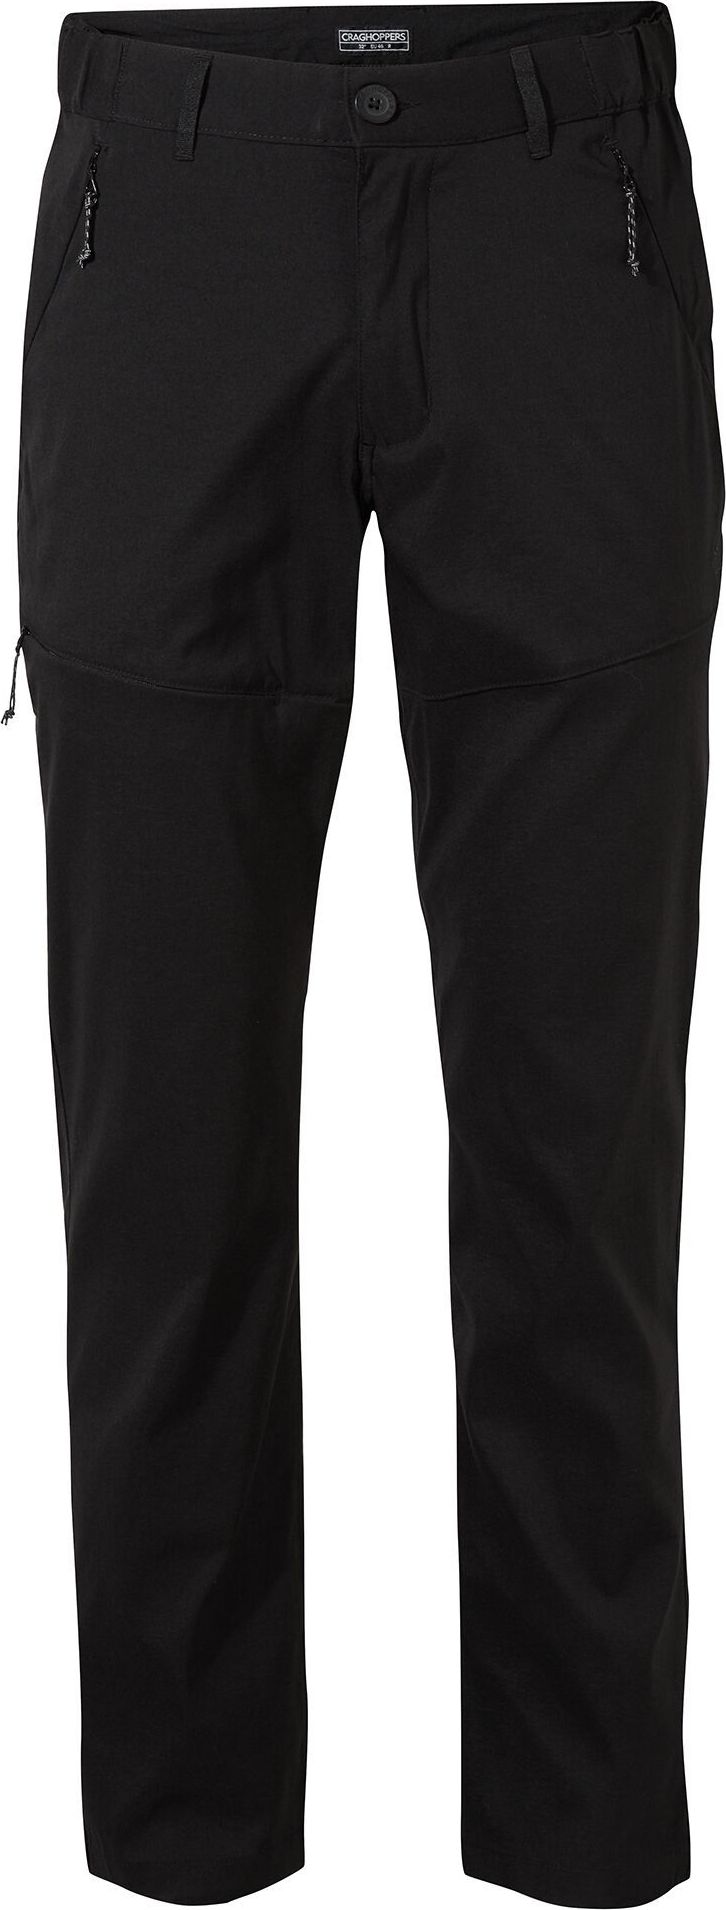 Craghoppers Men’s Kiwi Pro II Trousers Black